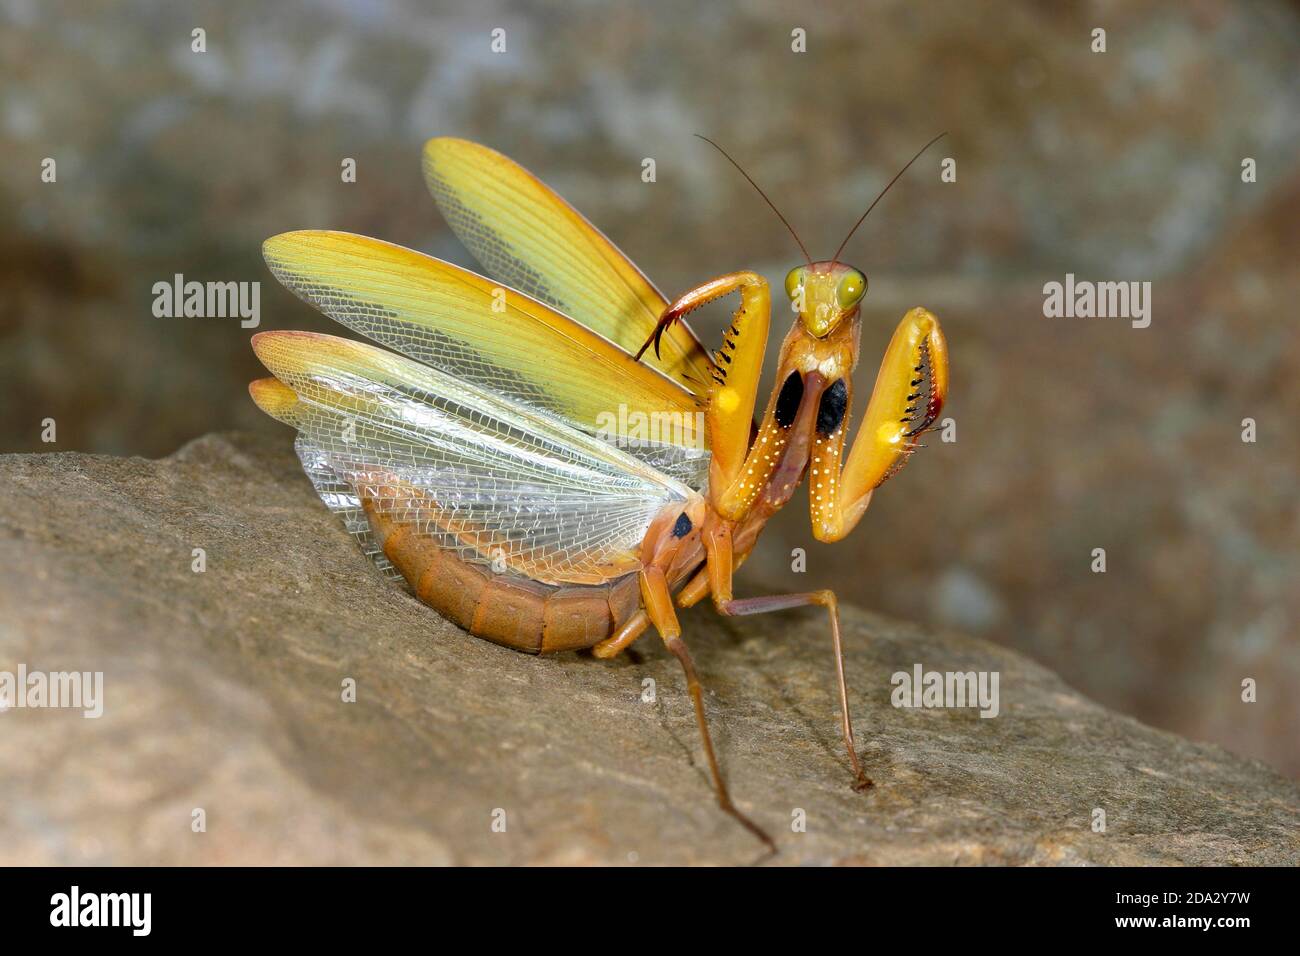 Mantis preying europea (mantis religiosa), morfa amarilla rara, postura defensiva, Alemania Foto de stock